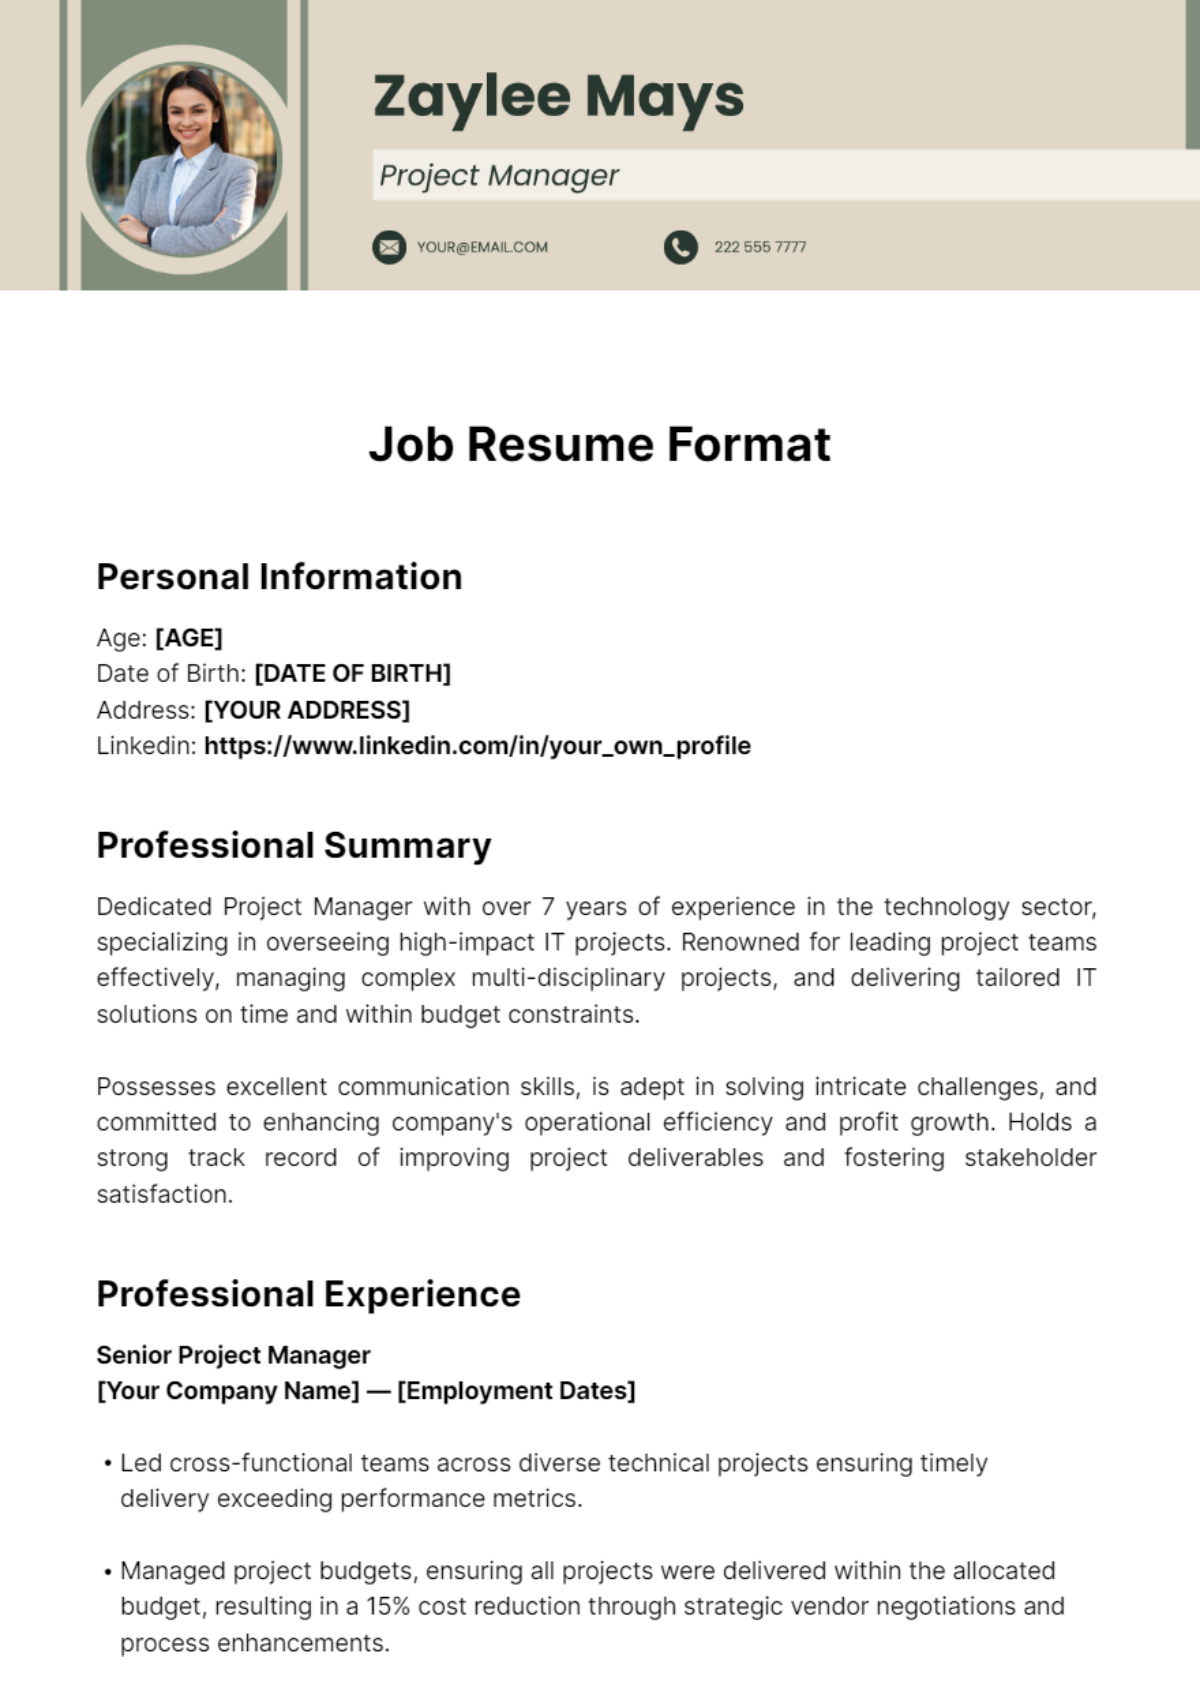 Job Resume Format Template